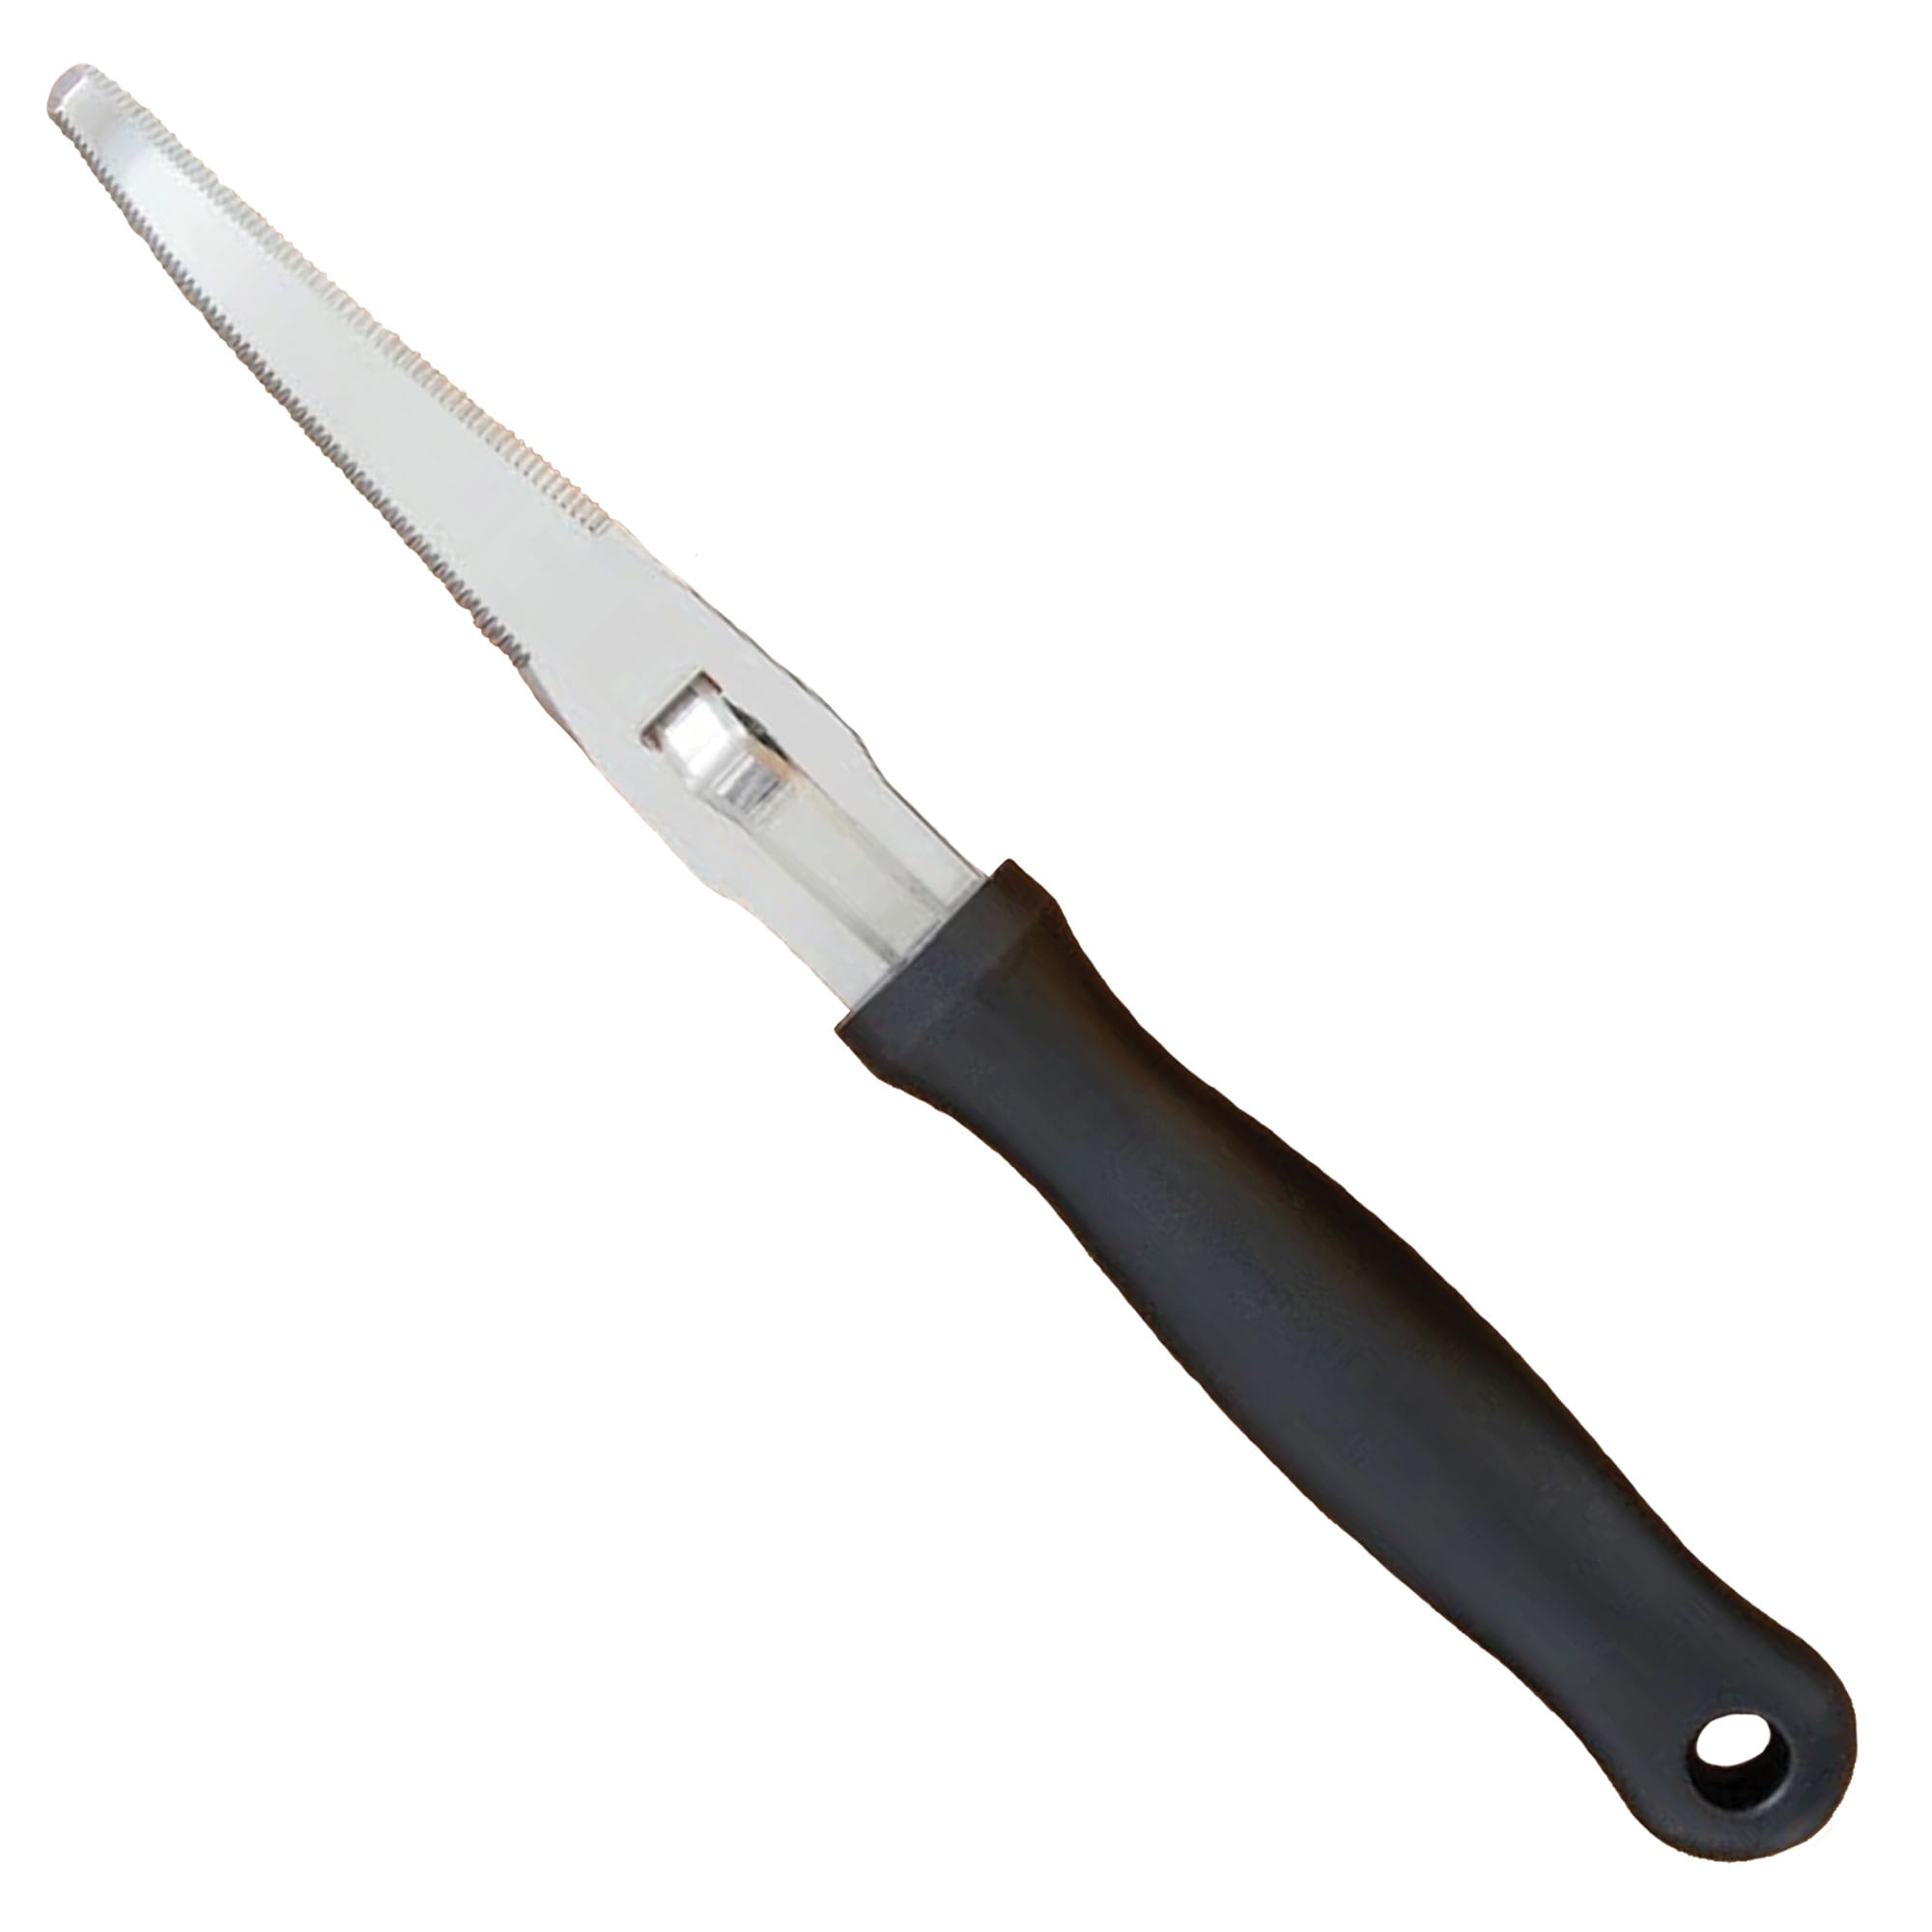  Professional Nylon Knife for Nonstick Pans, Kitchen